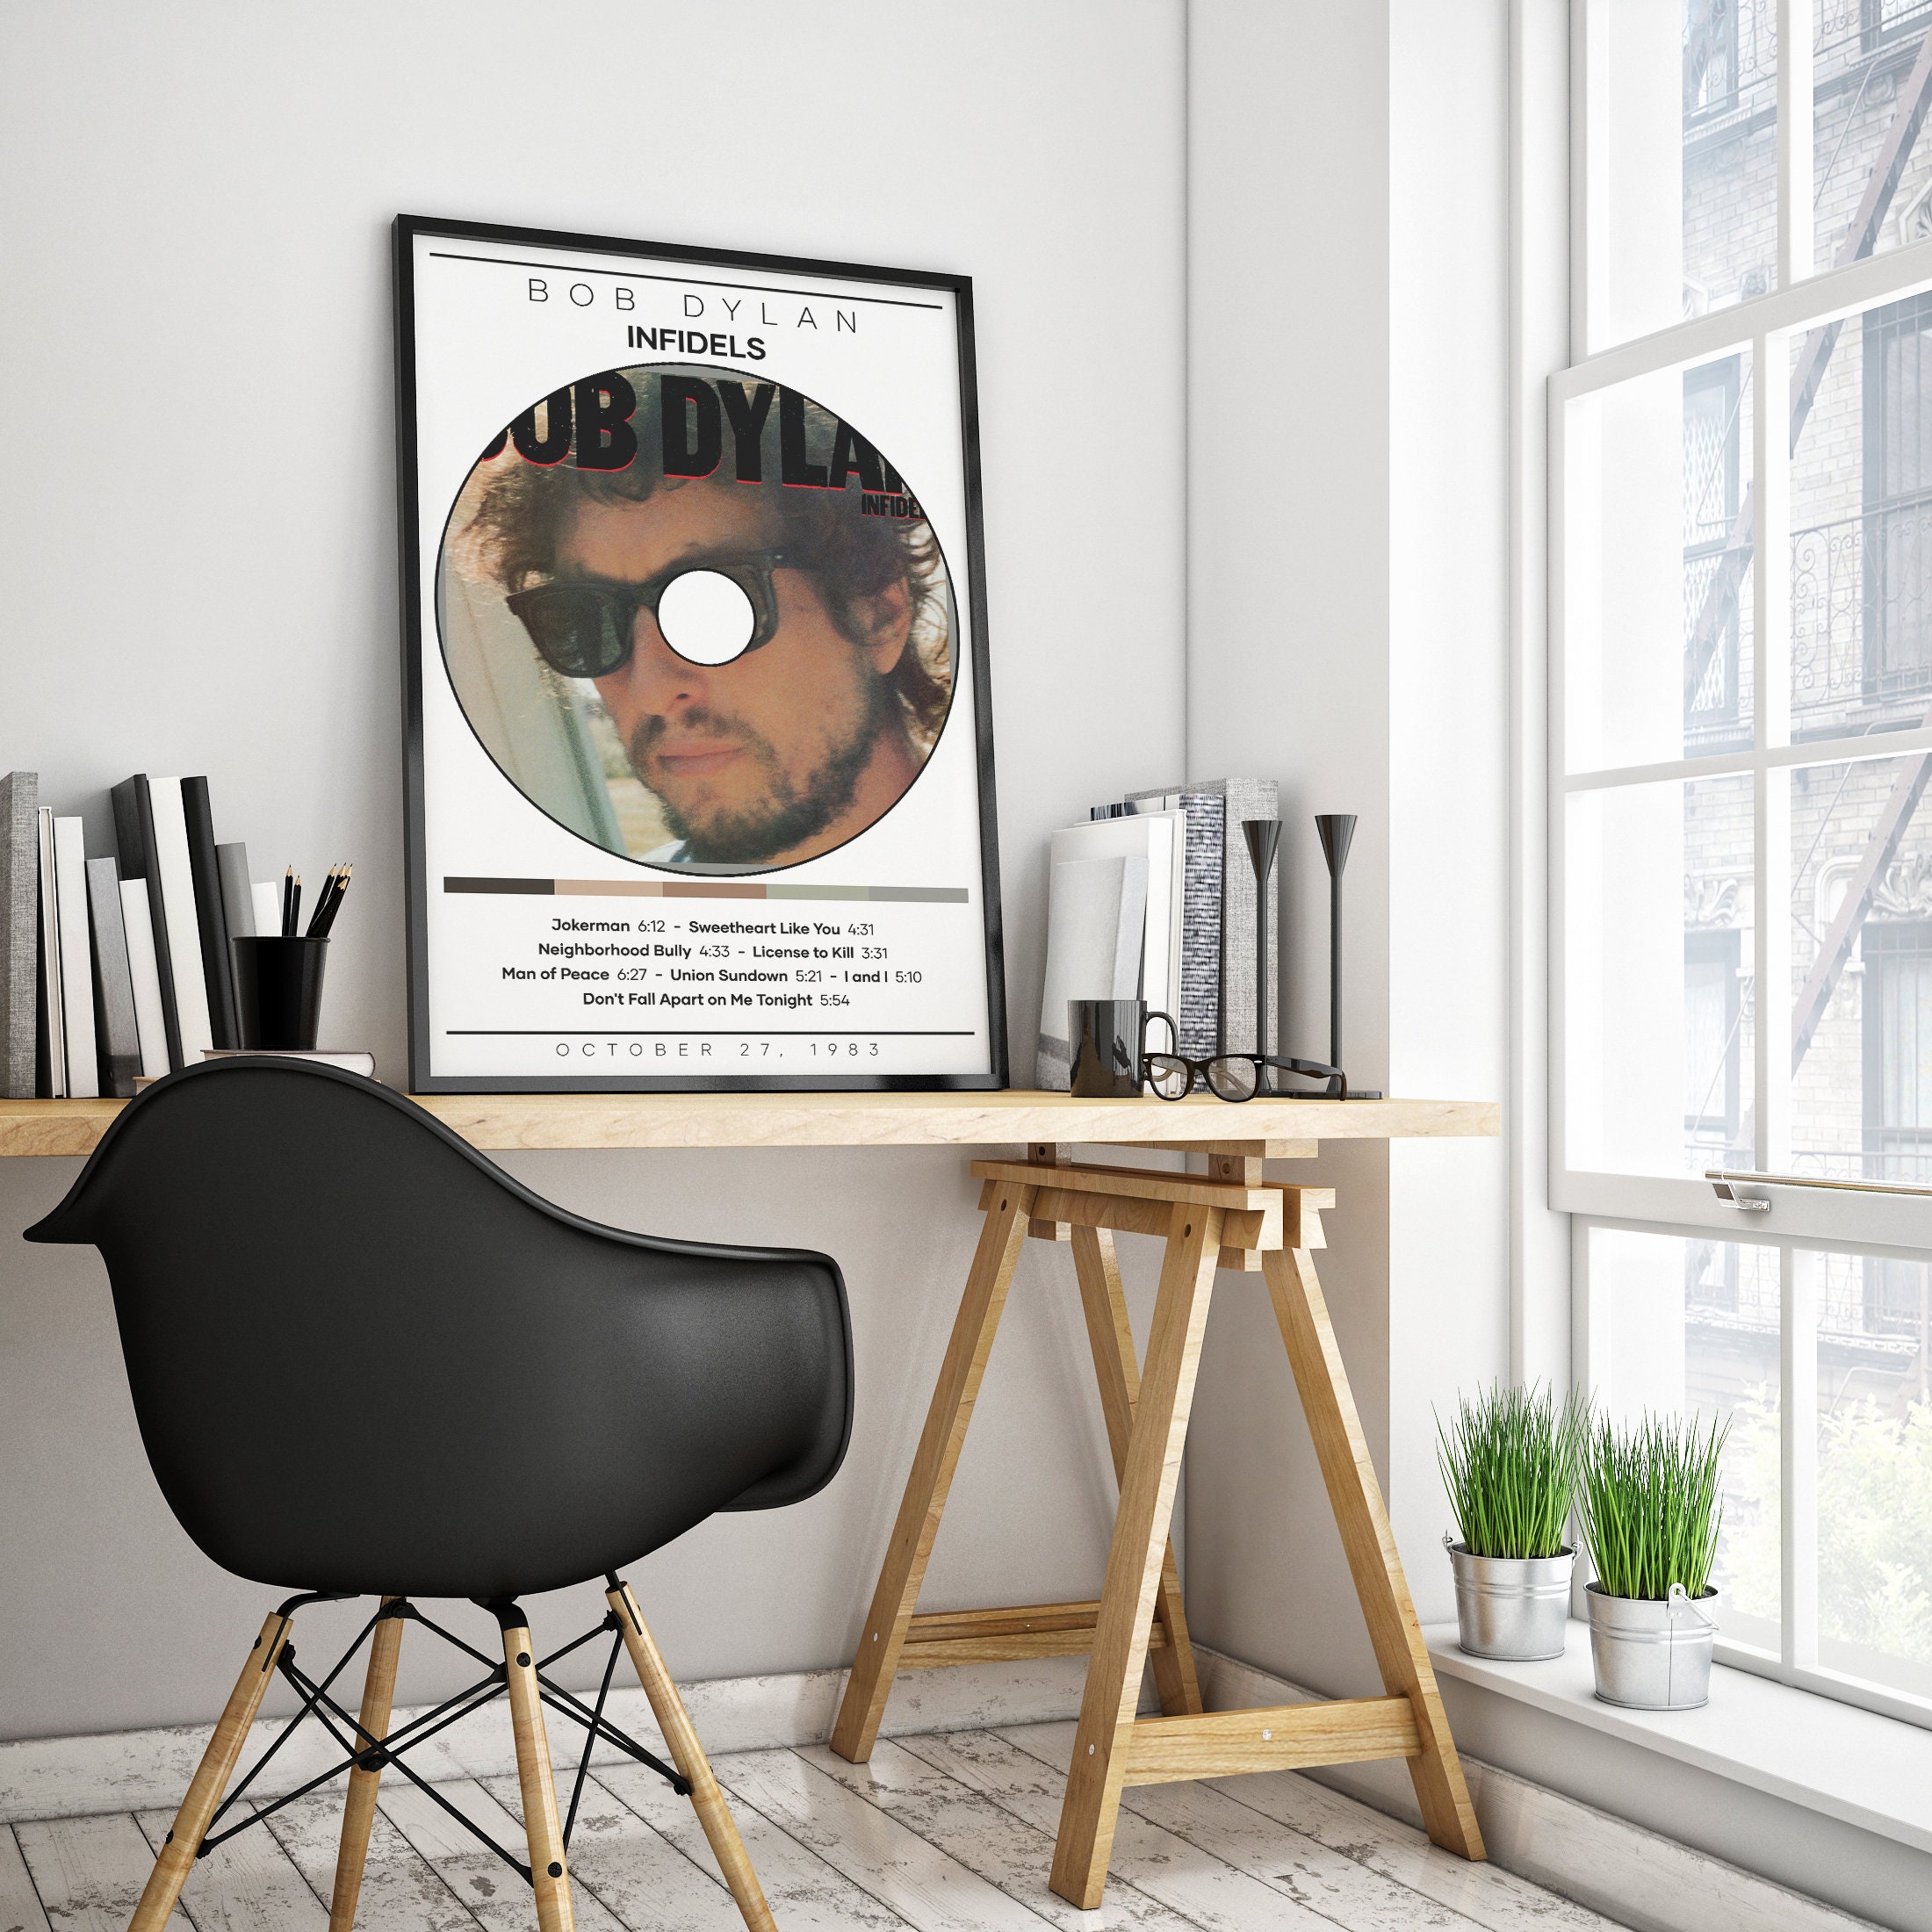 Bob Dylan Poster Print | Infidels Poster | Rock Music Poster